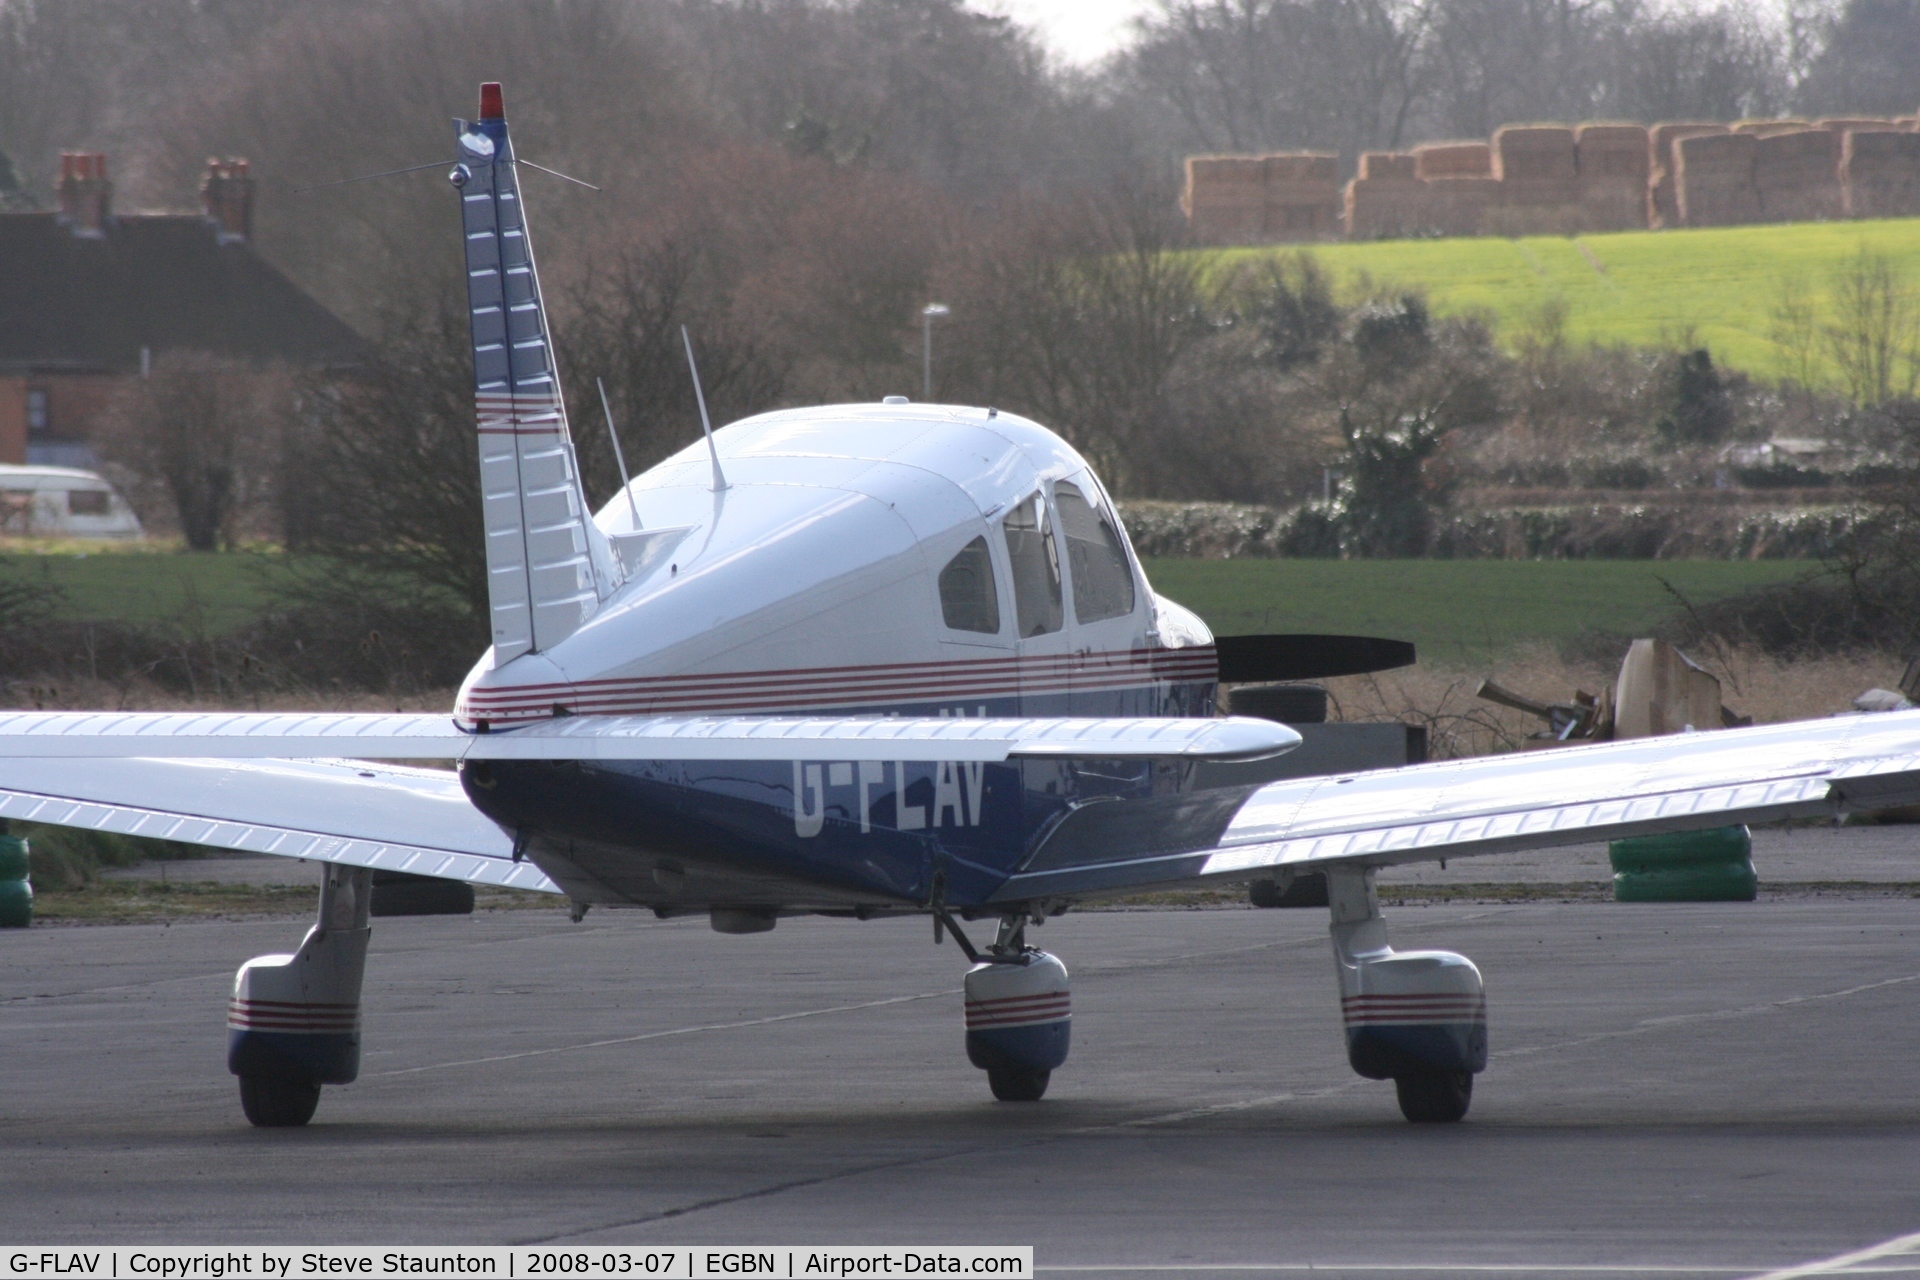 G-FLAV, 1980 Piper PA-28-161 Warrior ll C/N 28-8016283, Taken at Nottingham Airport